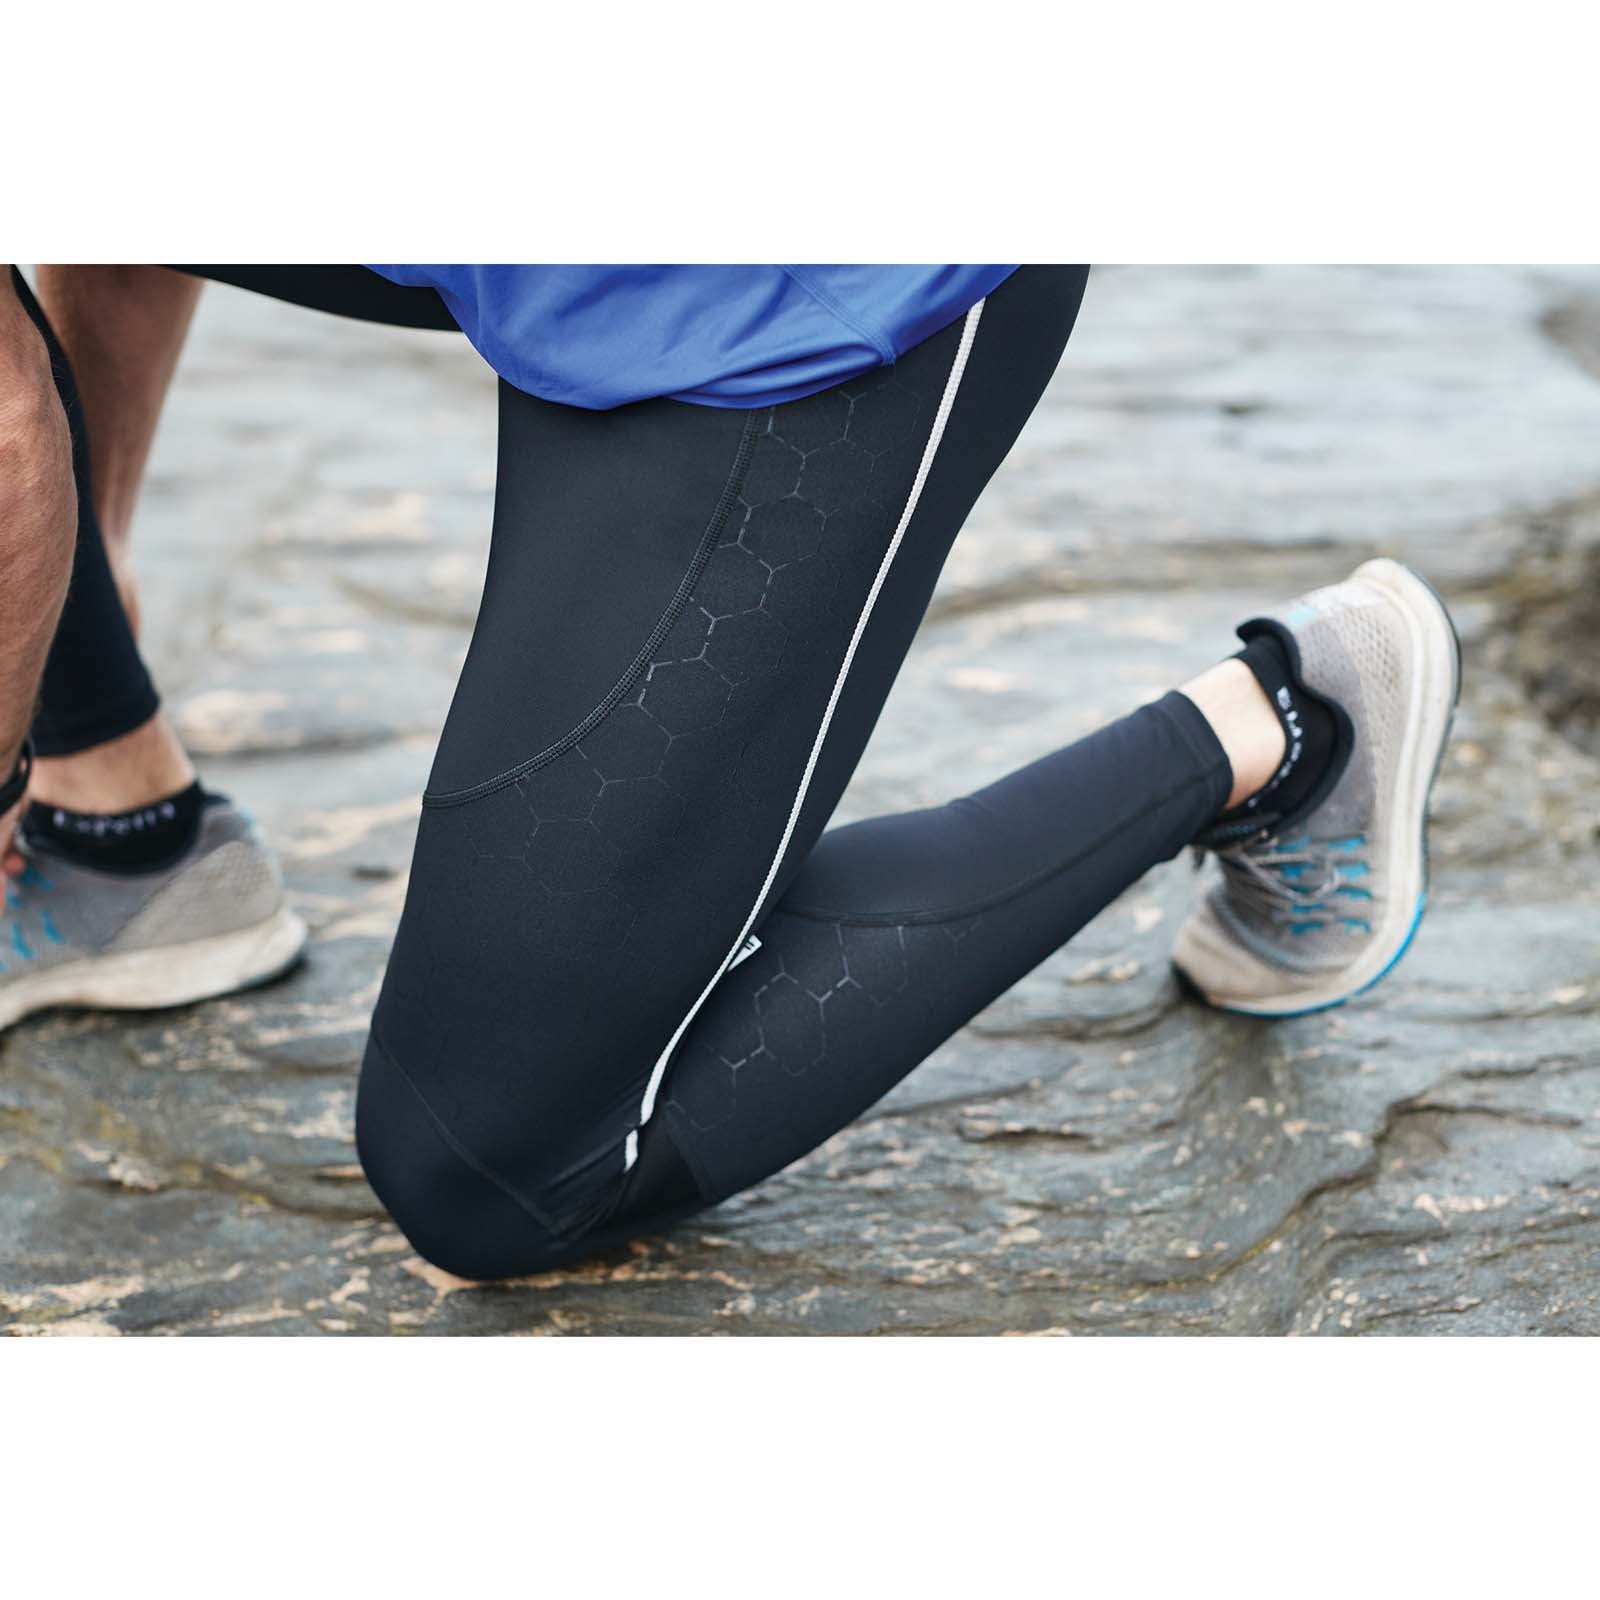 Men's Running Tights / Leggings with Zip - Black - Tribesports